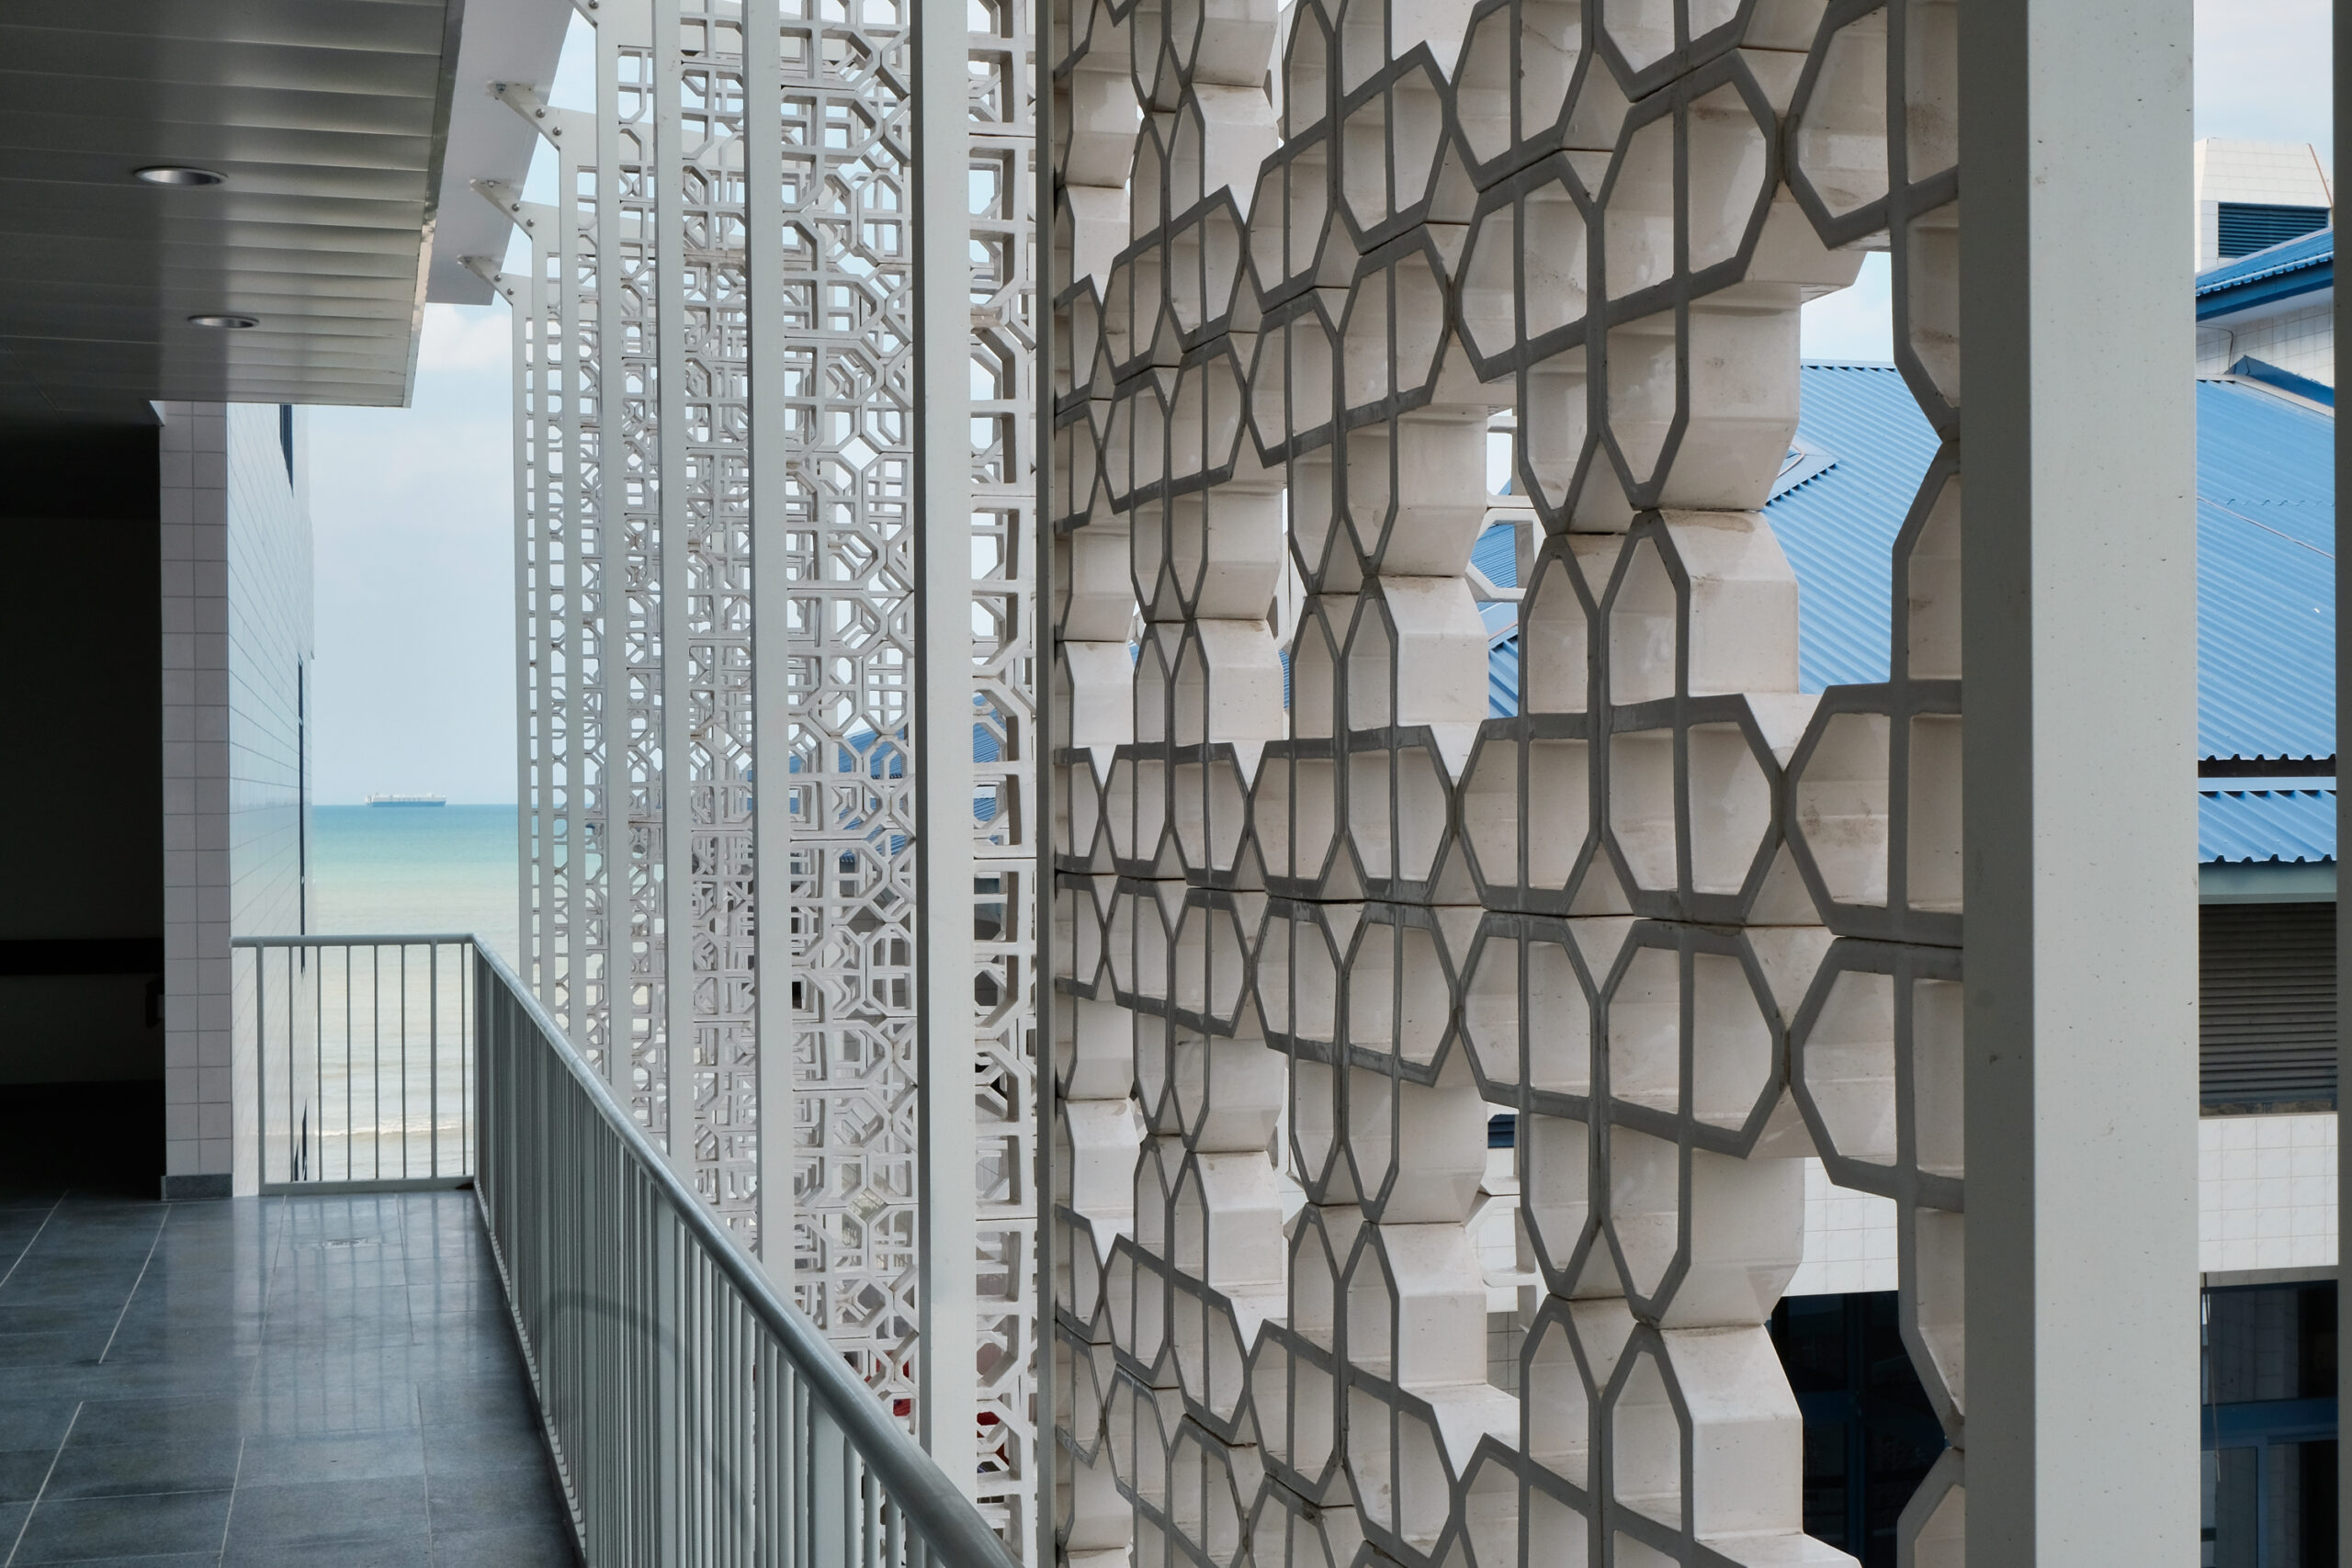 Ocean view and ceramic block screens from lift lobby